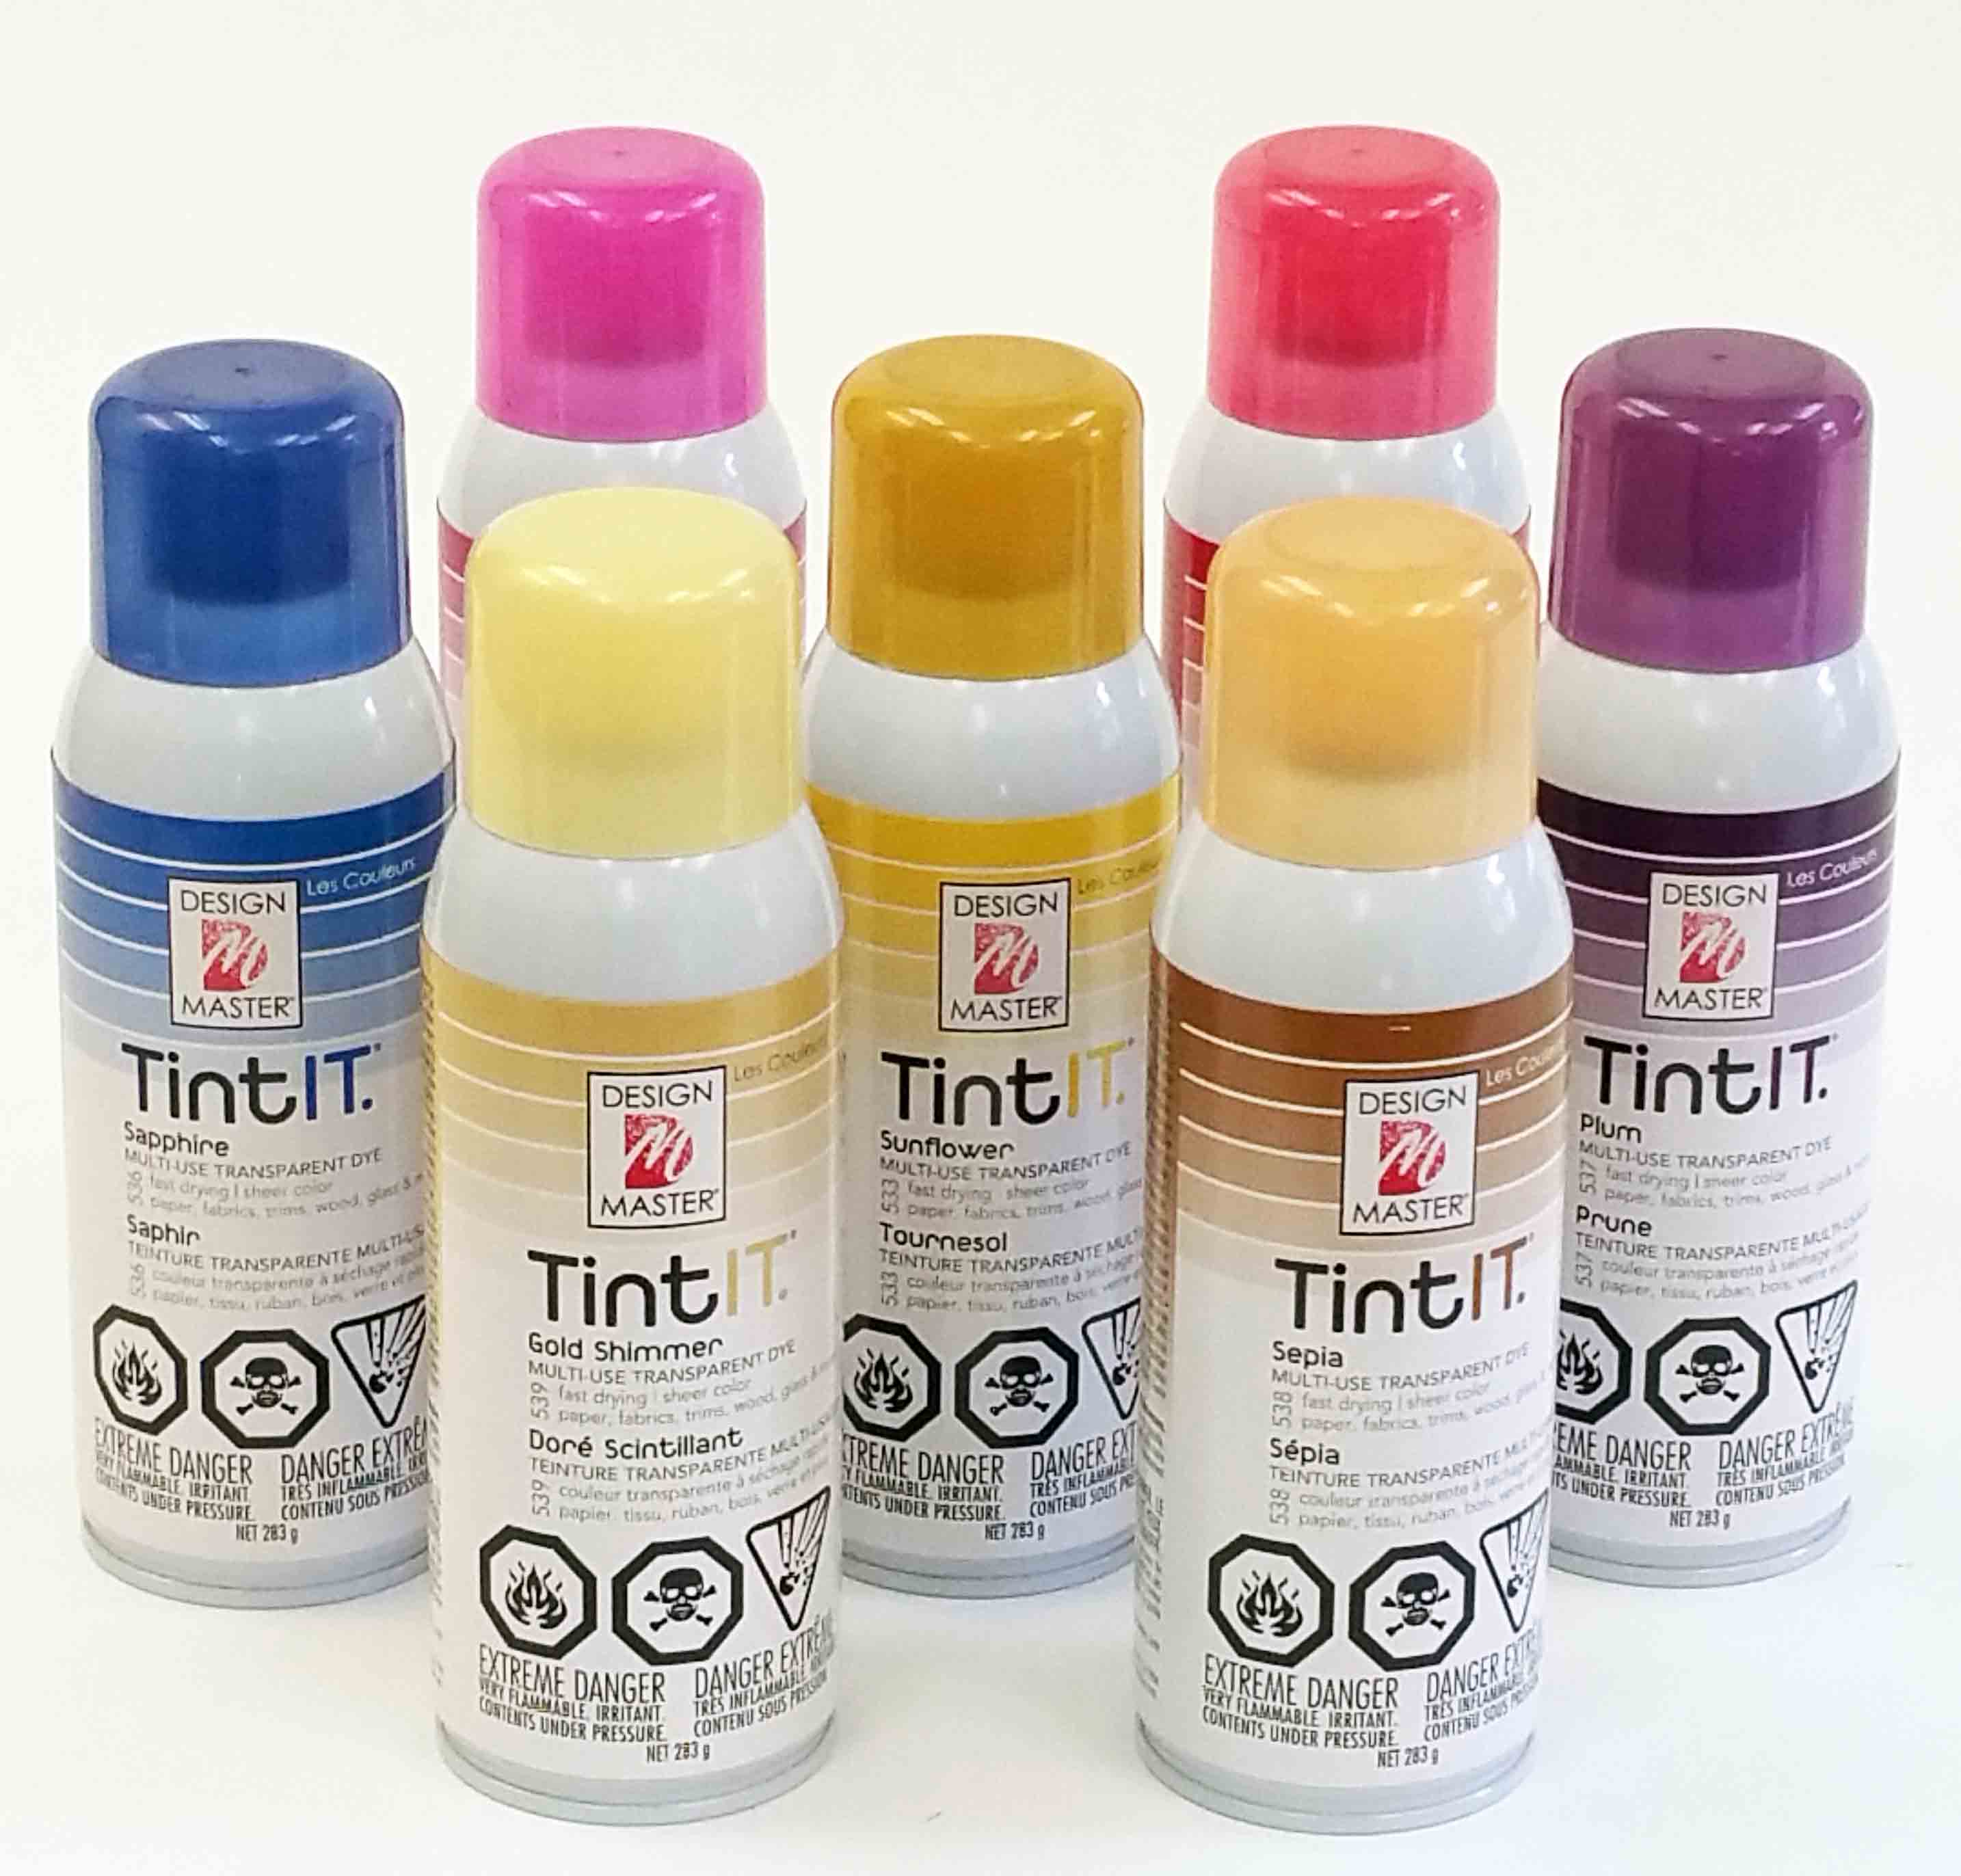 714 - Multi-Use Transparent Dye - 9.35 ea, 9.05/4